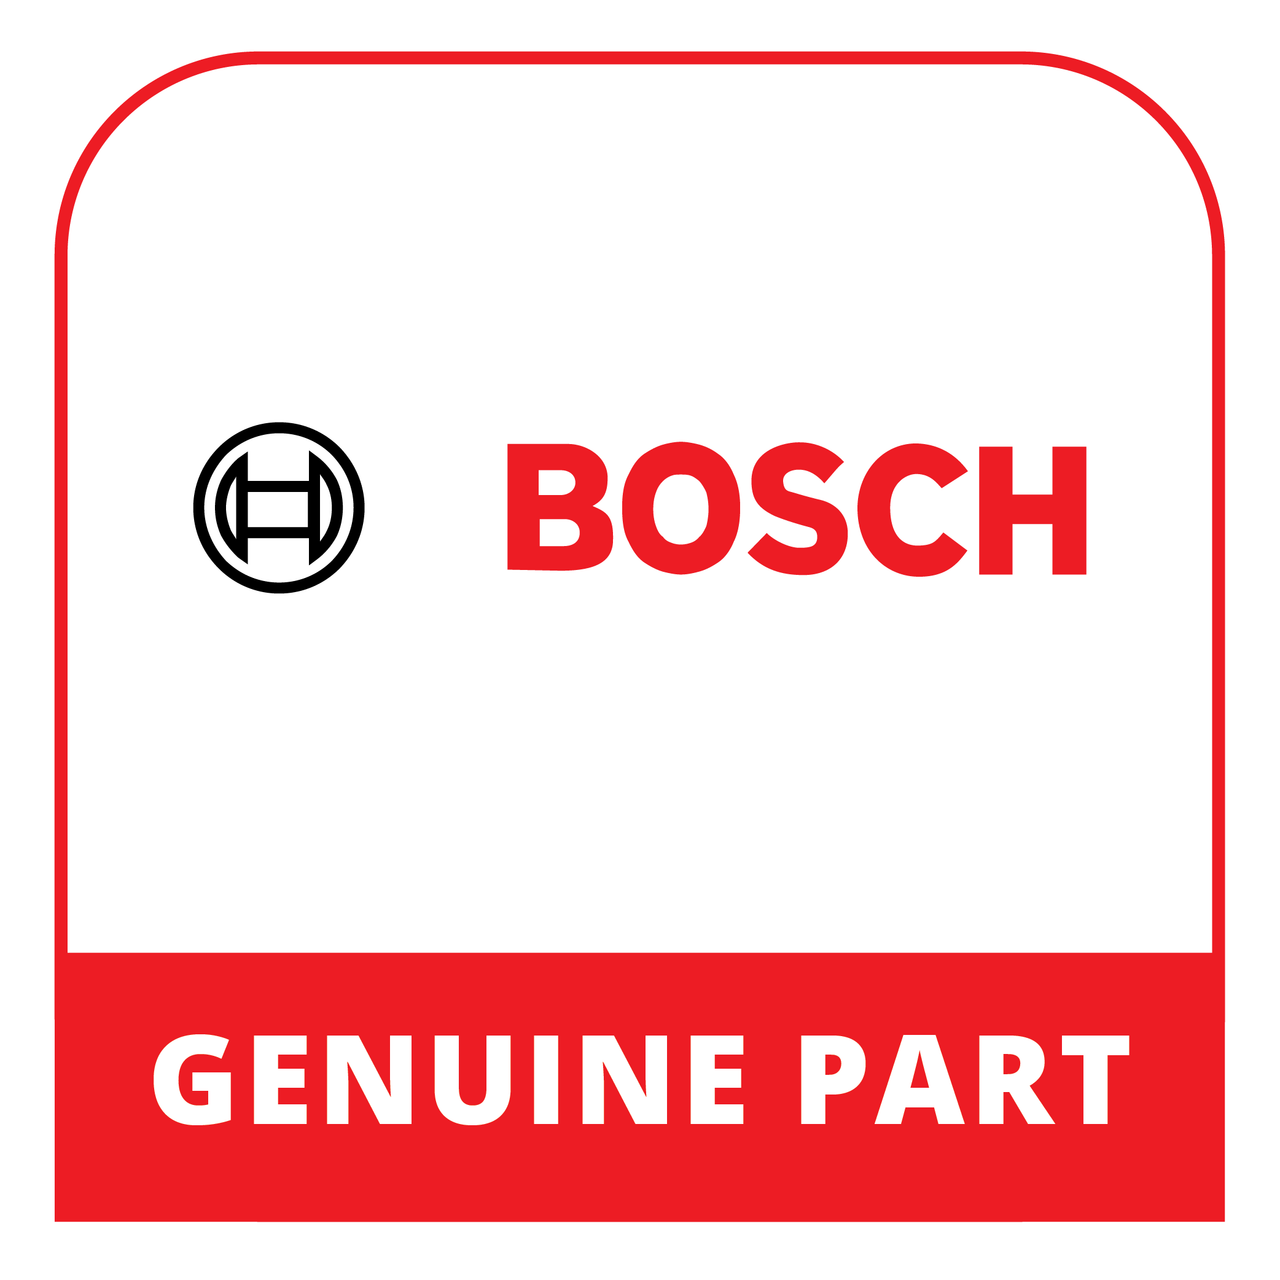 Bosch (Thermador) 23002673 - Glass Ceramic Hob Top - Genuine Bosch (Thermador) Part